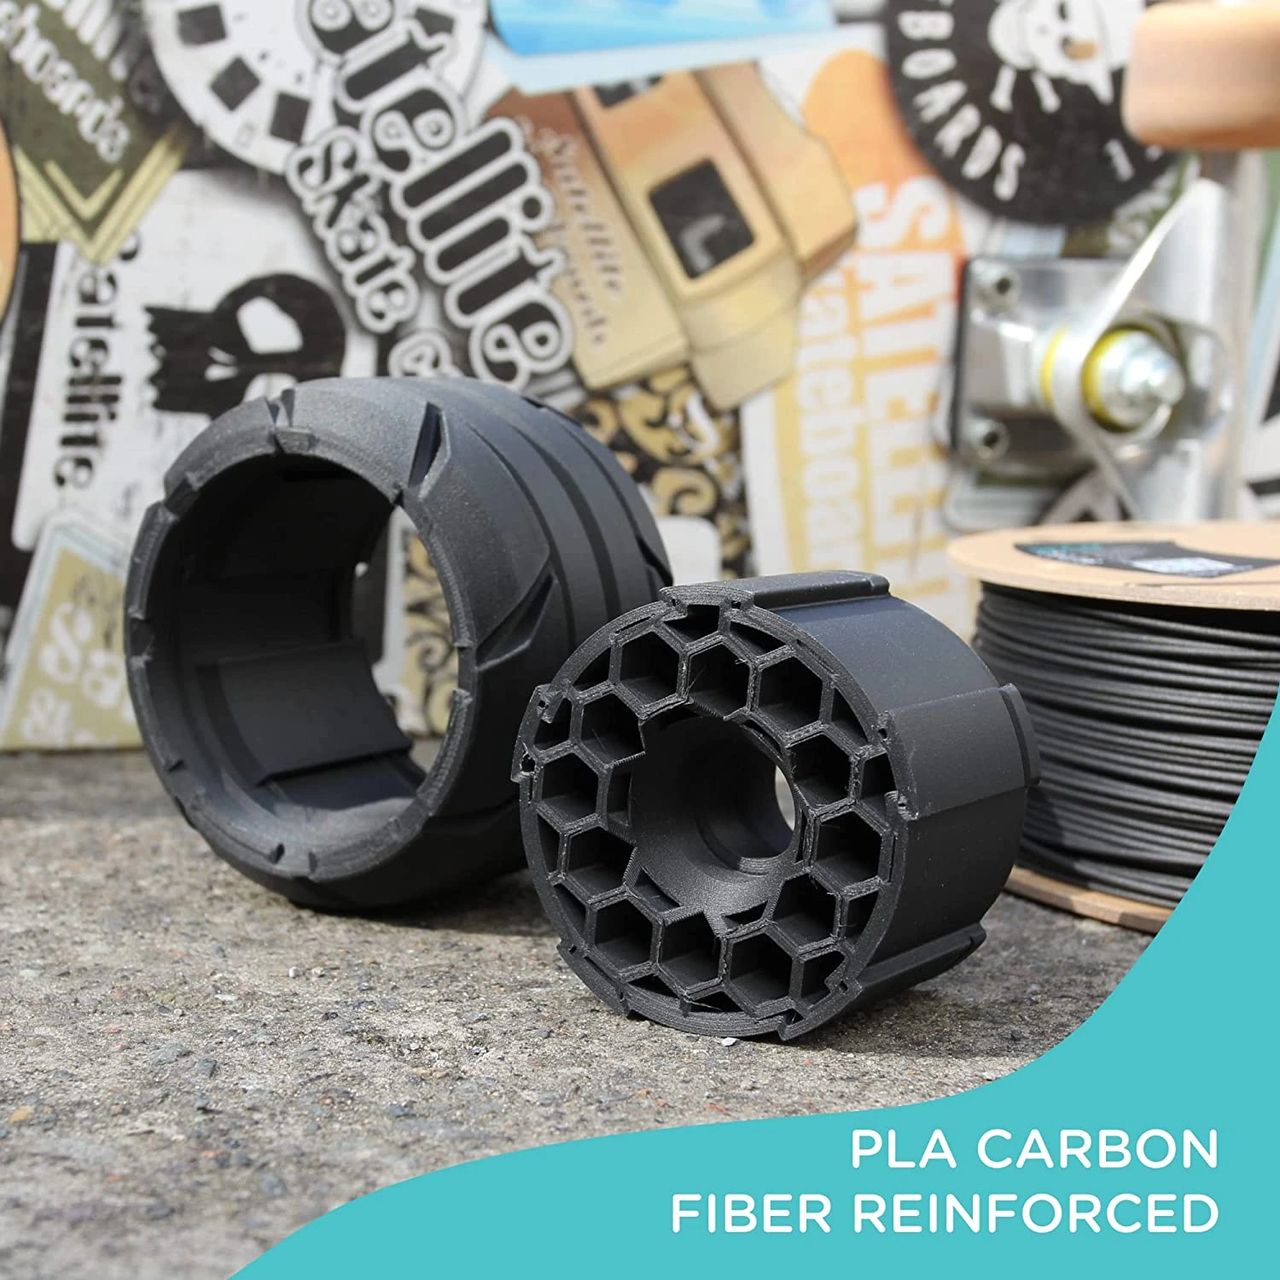 Carbon Fiber Reinforced PLA